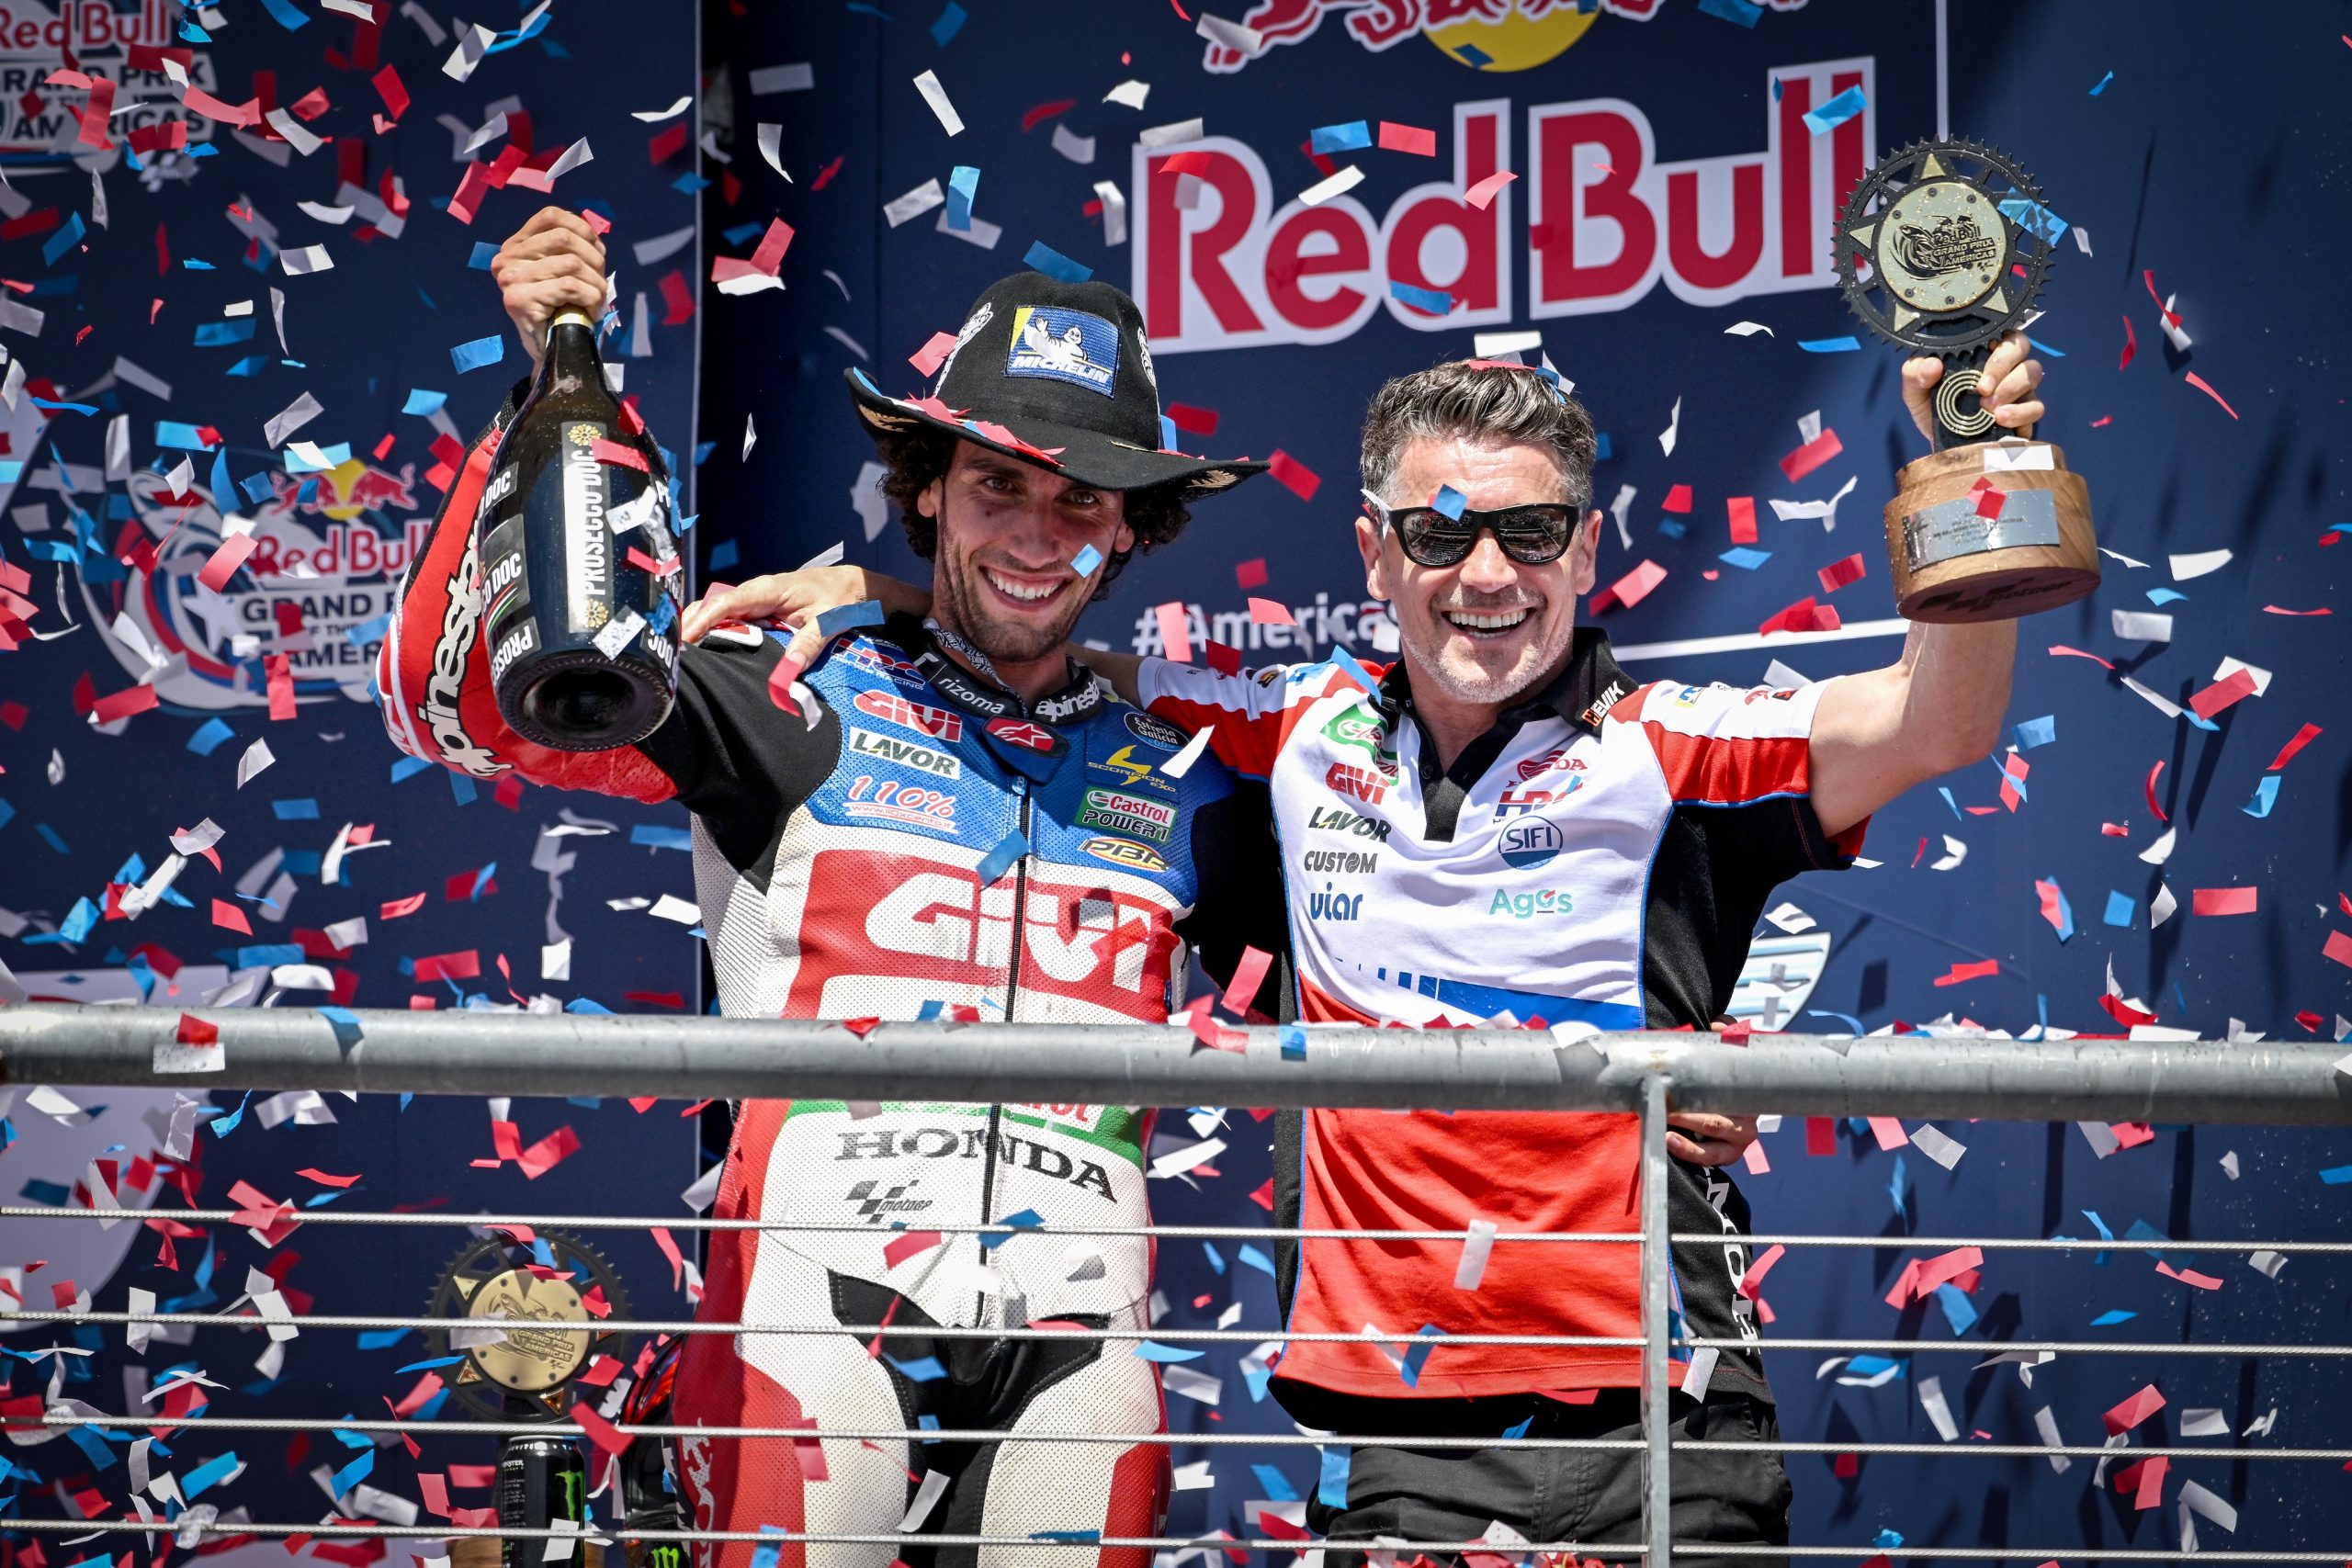 Setelah Penantian Lama, Akhirnya LCR Honda Puncaki Podium MotoGP Amerika Bersama Alex Rins